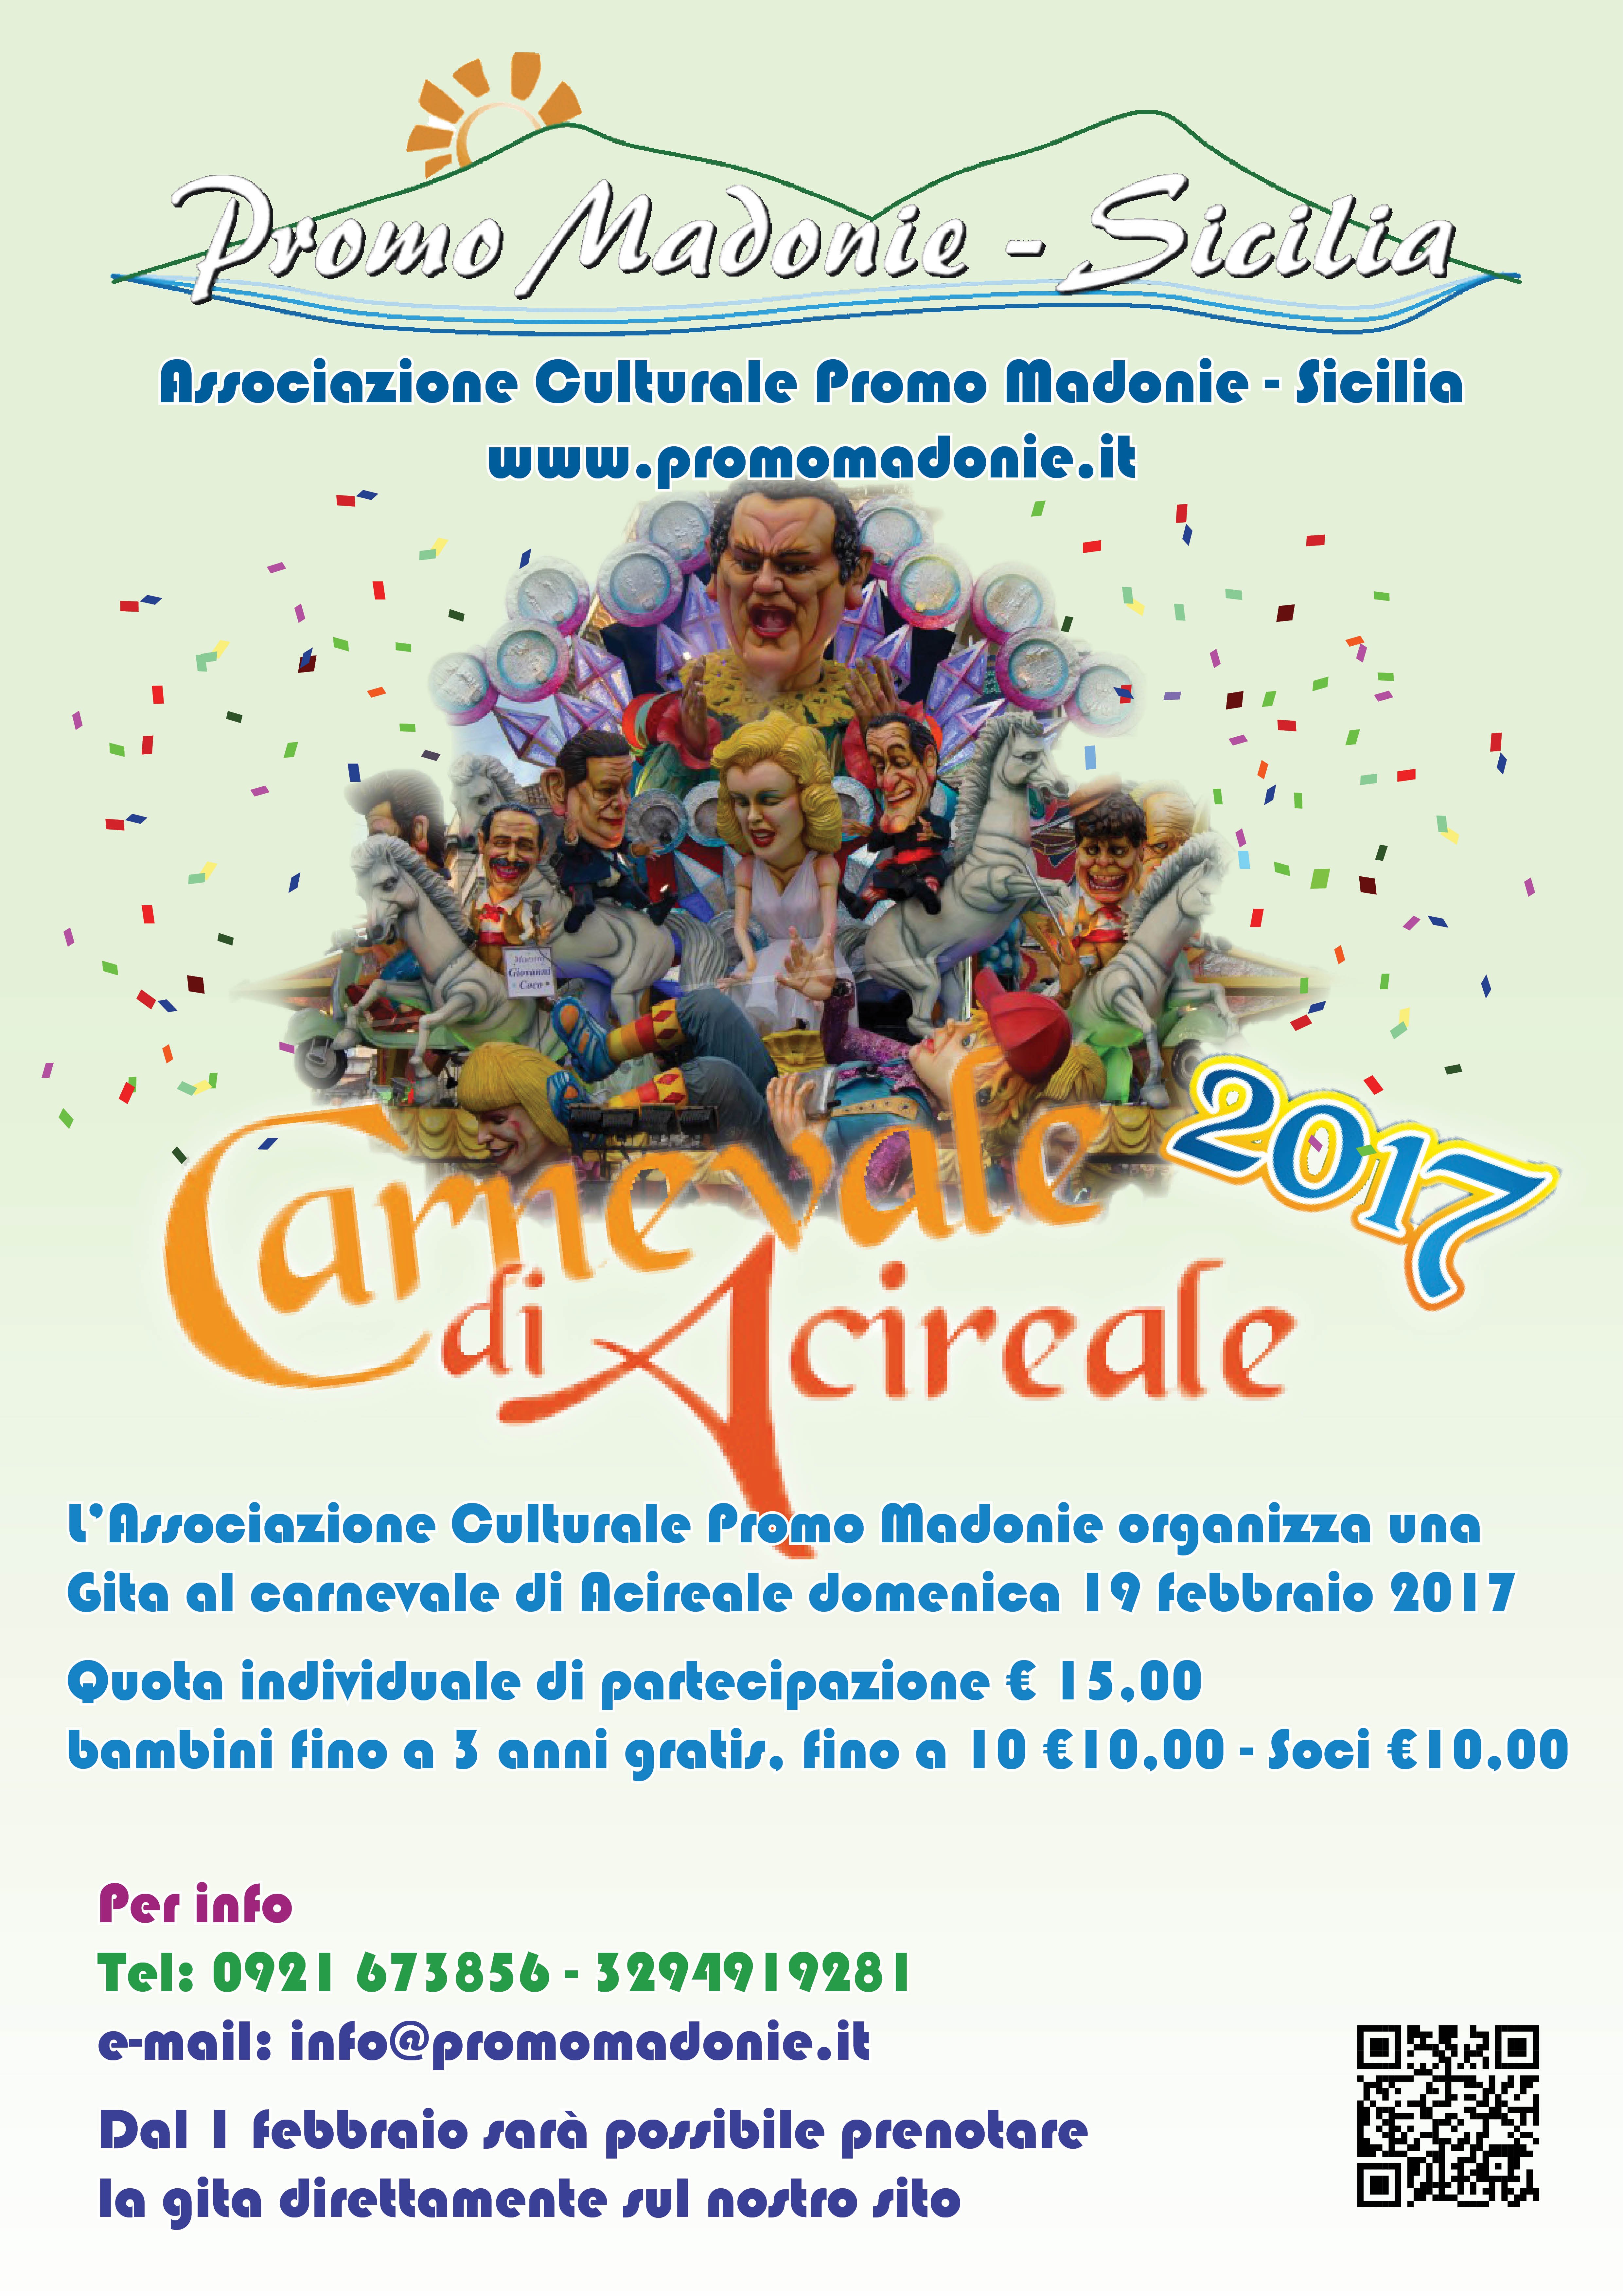 Carnevale ad Acireale gita del 19 febbraio 2017